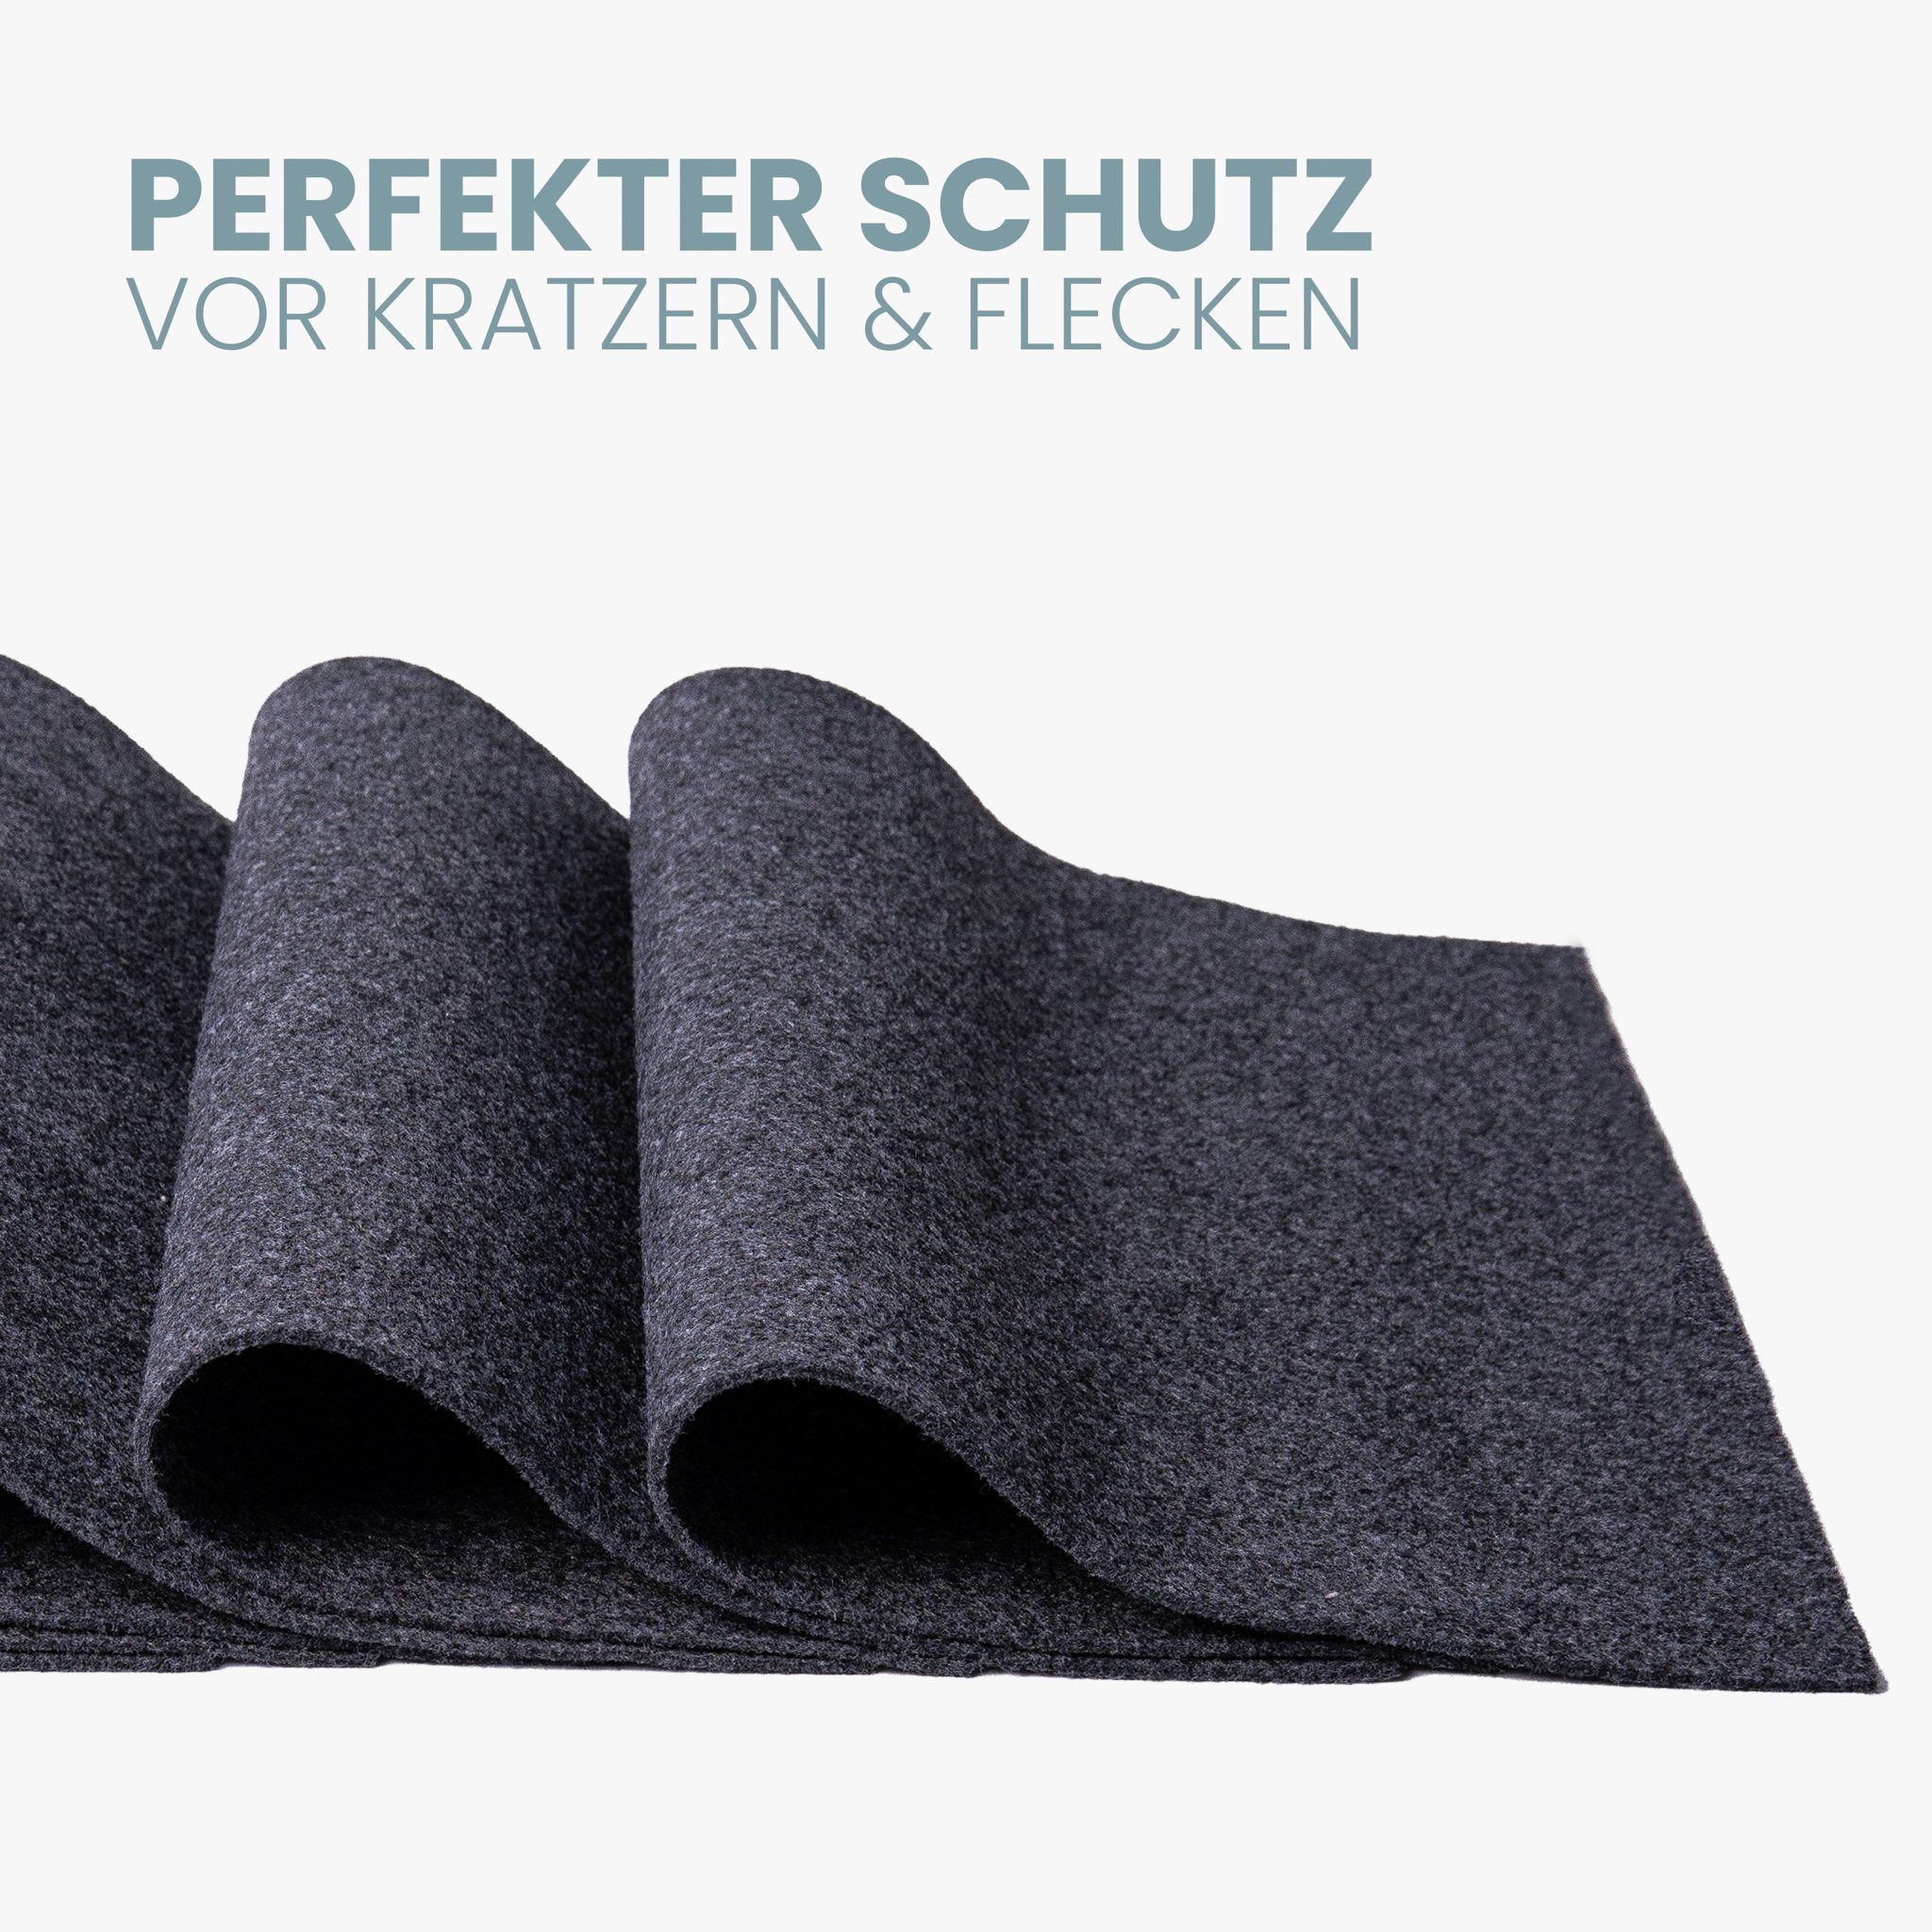 Platzset, Filz (40 x - Platzsets, Made Tischset - Green and Recycling Easy Germany in Filz 30cm)